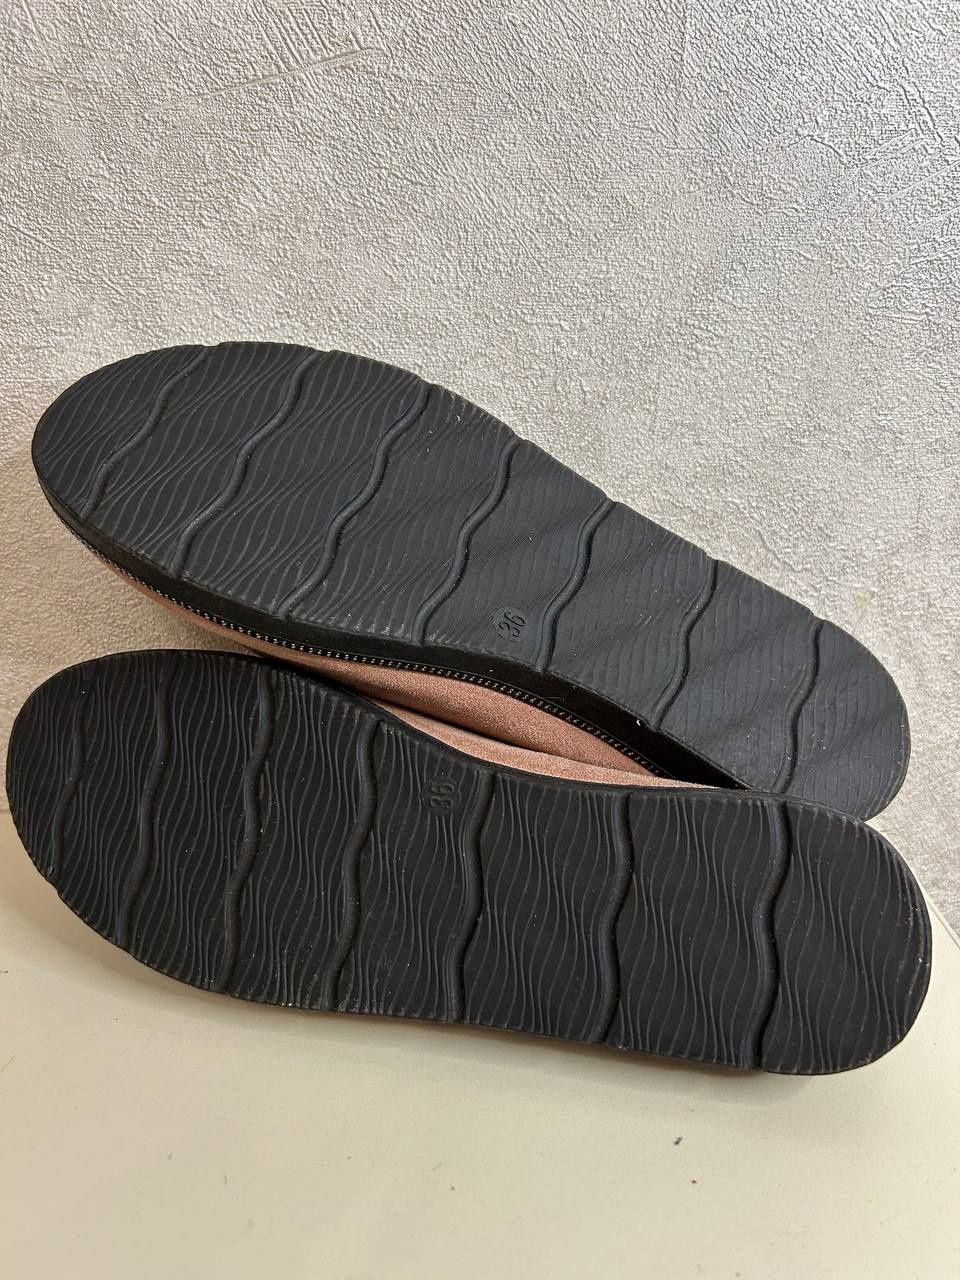 Туфли балетки черевики мокасины женские недорого 36 40 размер